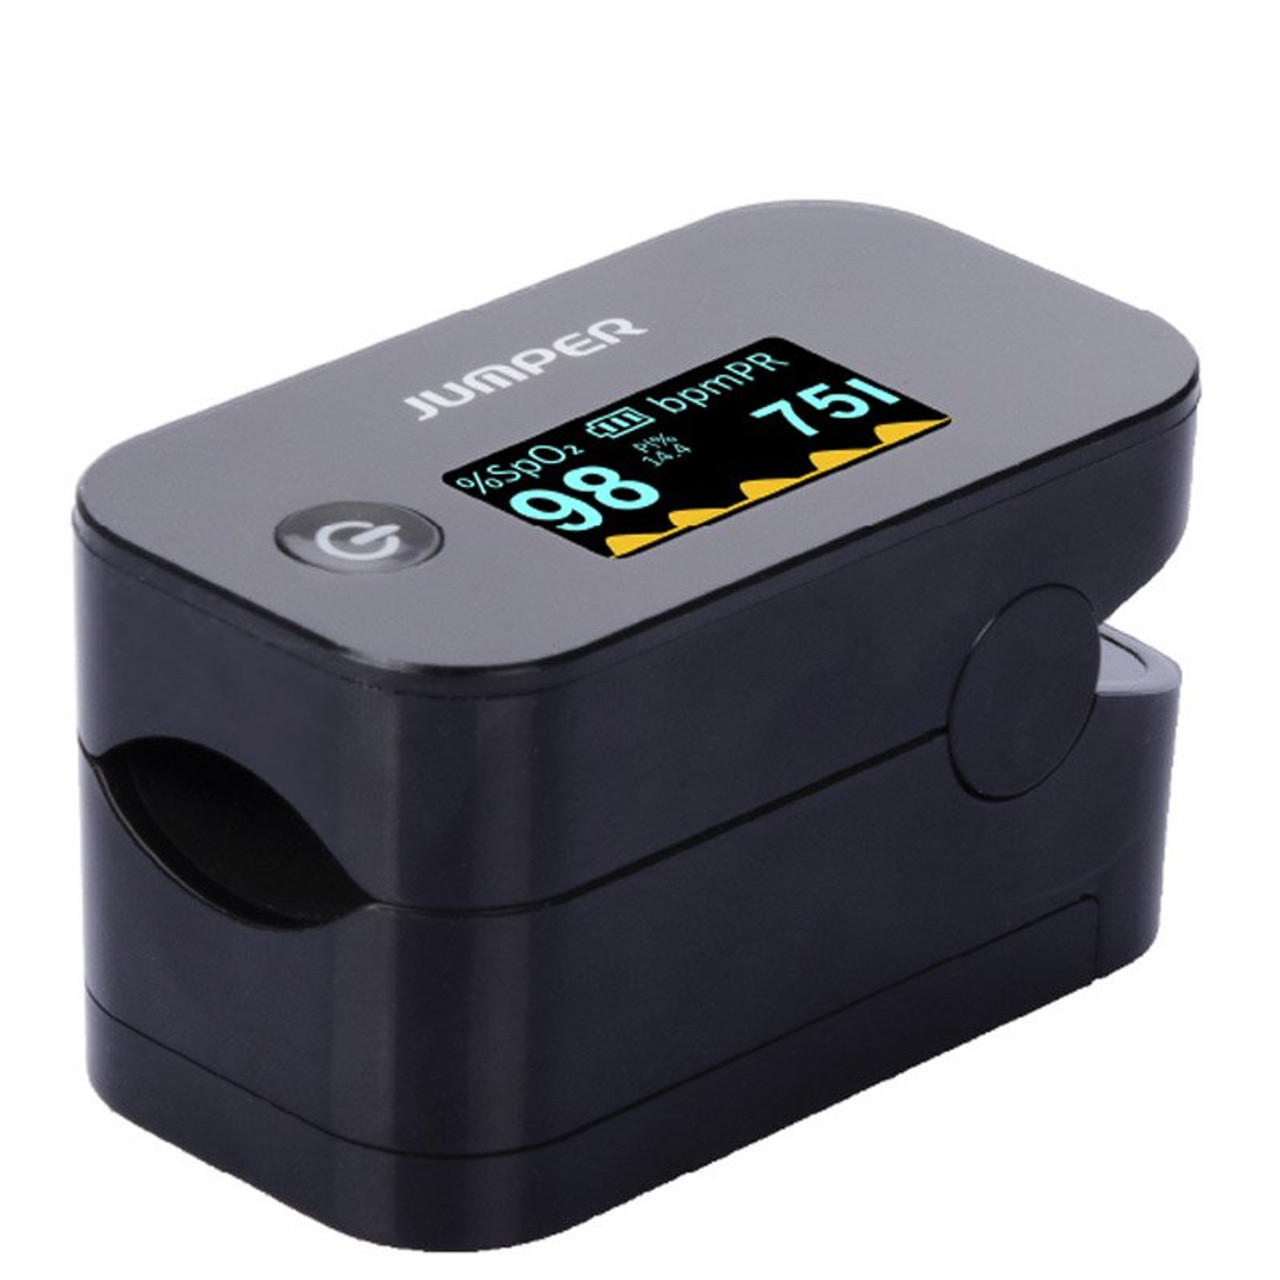 Pulse Oximeter, Finger Pulse Oximeter with OLED Display, Pulse Oximeter  Fingertip, Blood Oxygen Saturation Monitor Finger, Heart Rate Monitor for